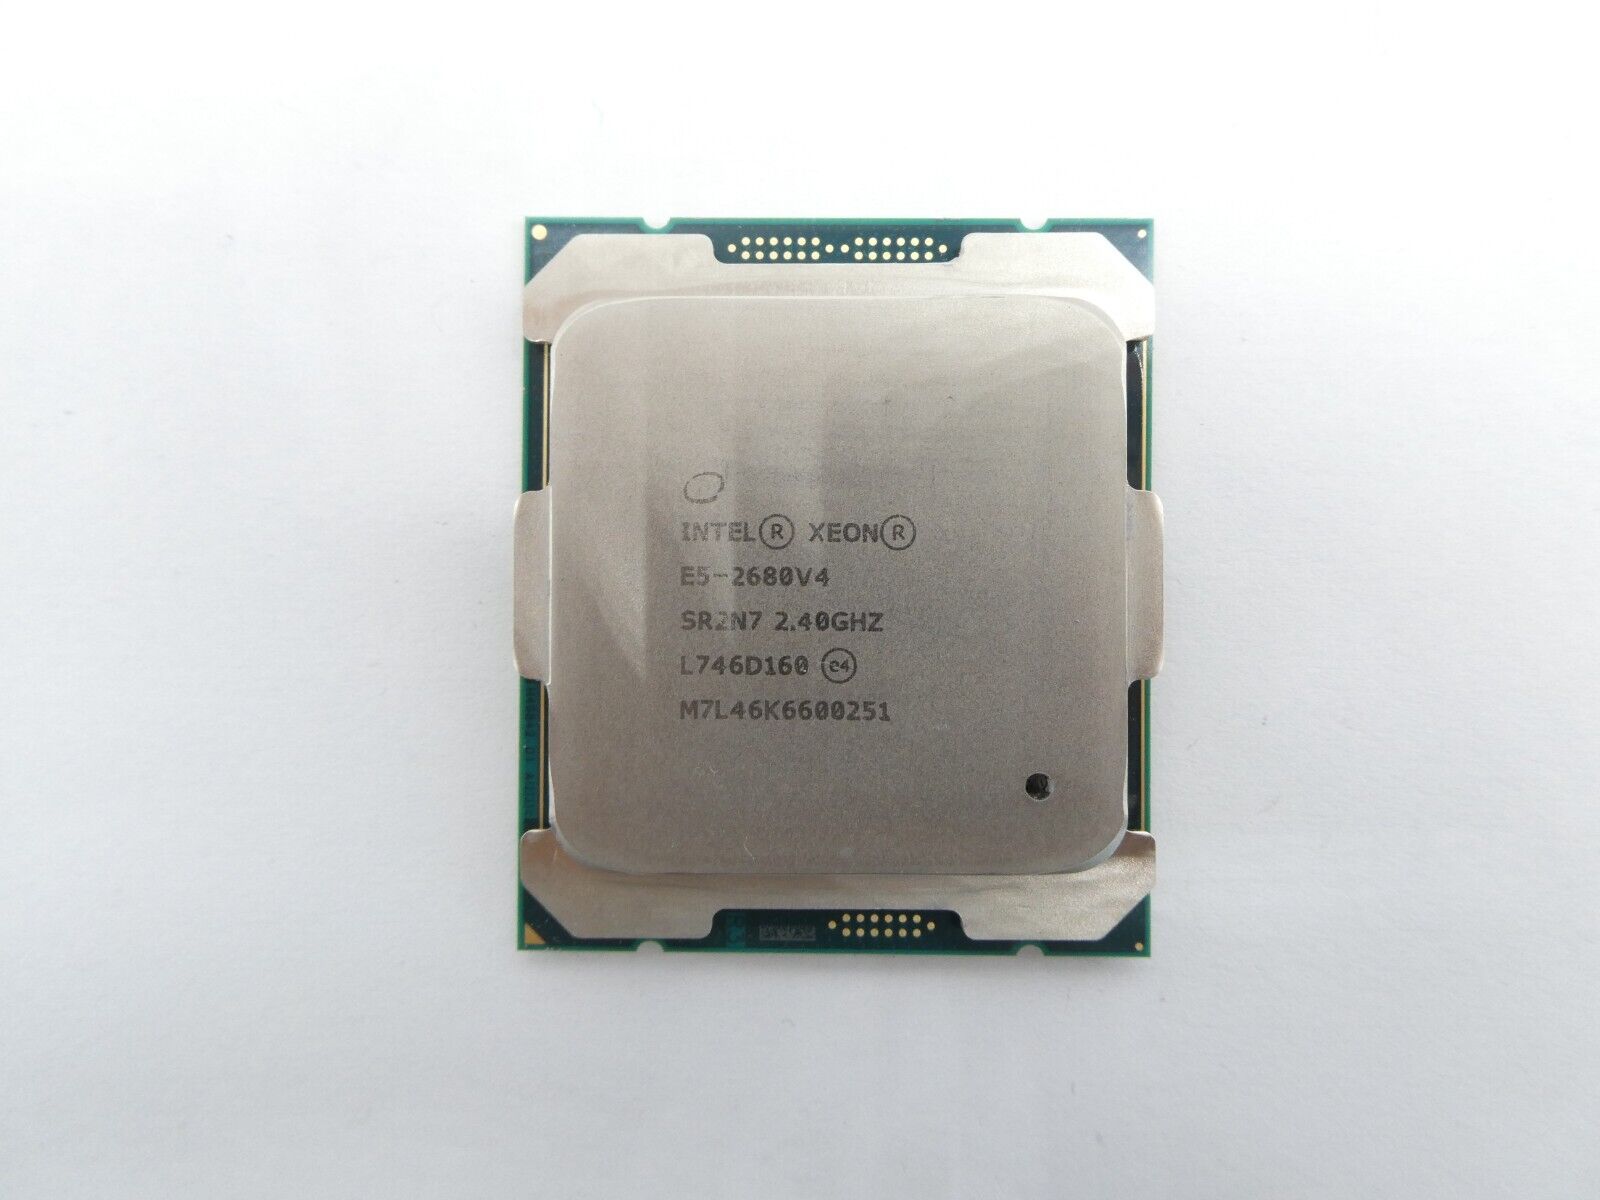 (LOT OF 10) Intel Xeon E5-2680V4 2.4GHz CPU Processor 14-Core LGA2011 SR2N7